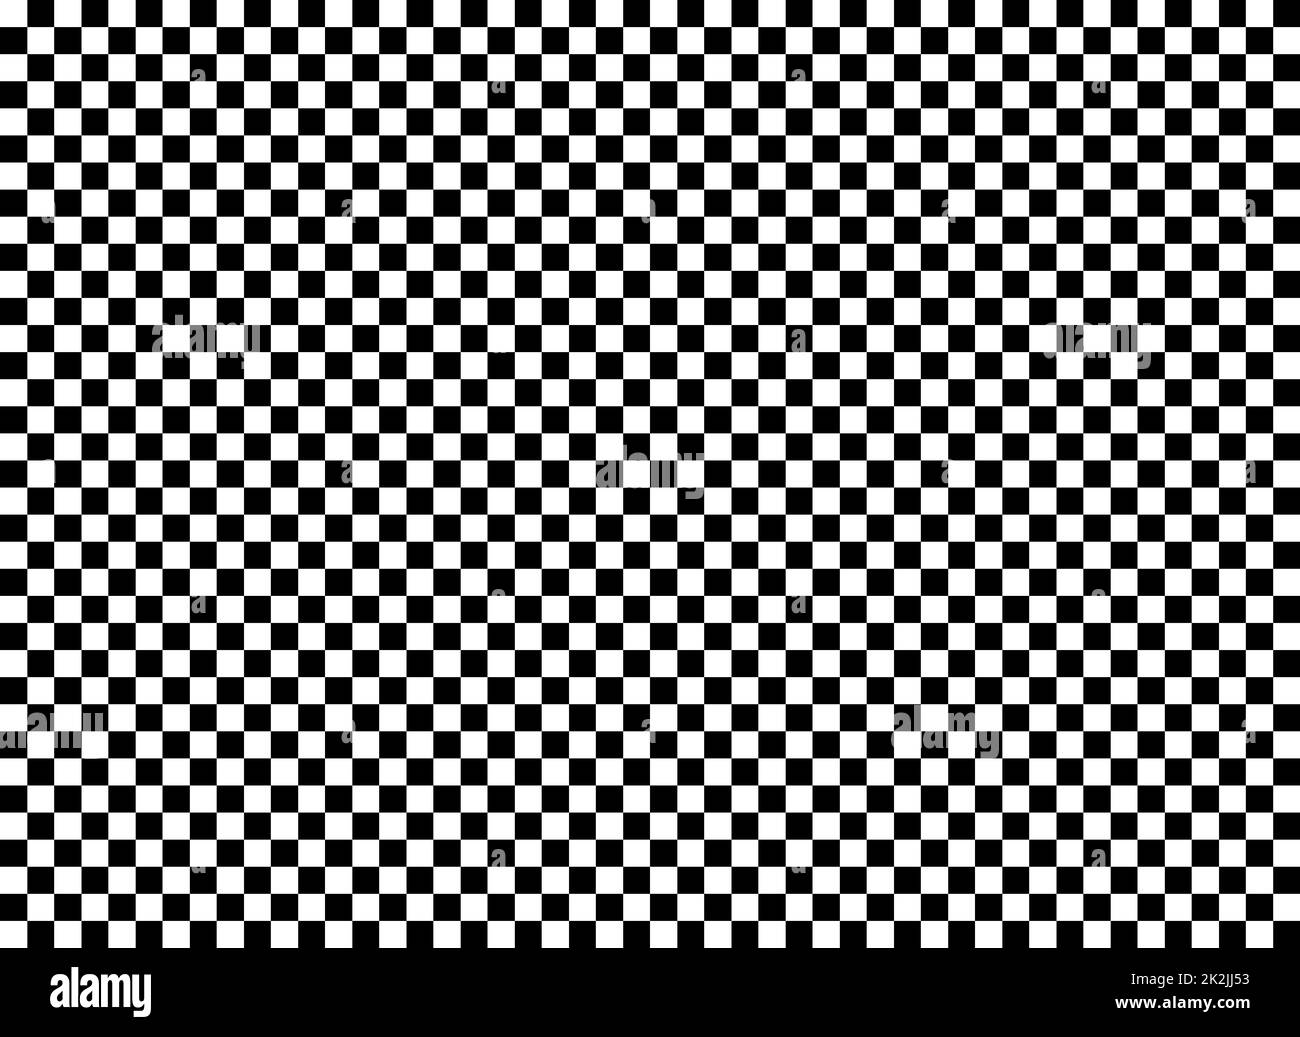 White and black checkered texture Stock Photo